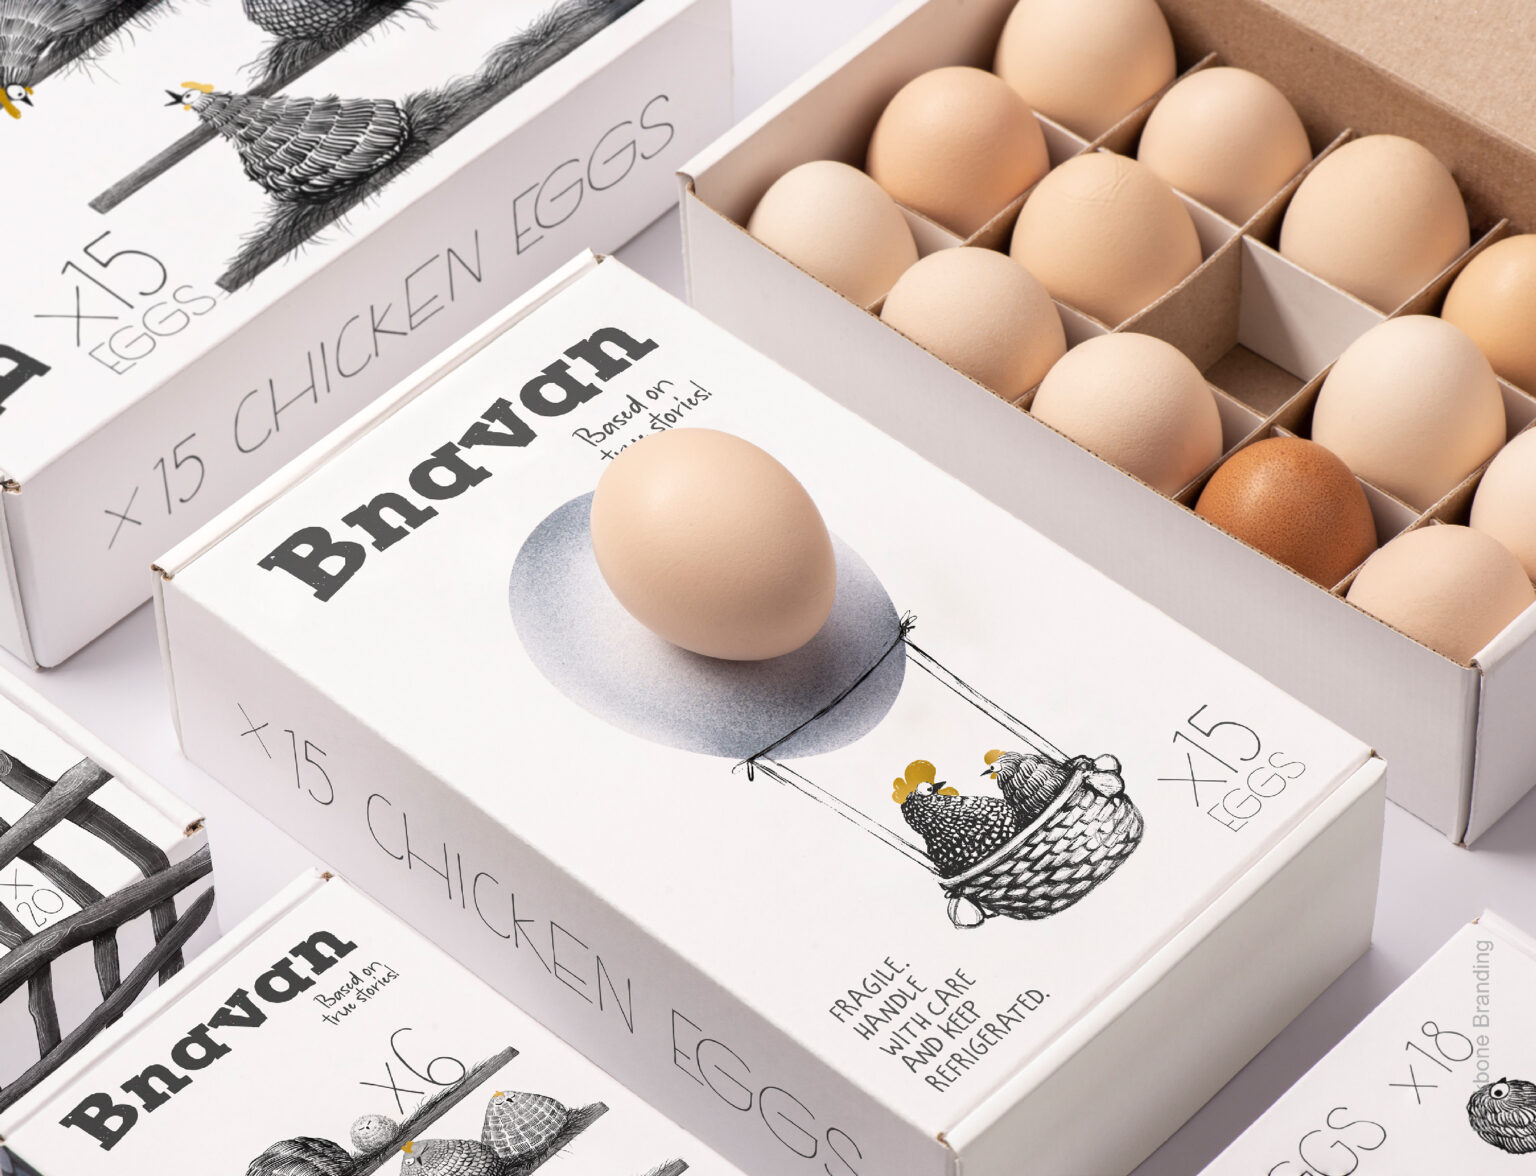 Яйца, Дизайн упаковки, Bnavan, Backbone Branding